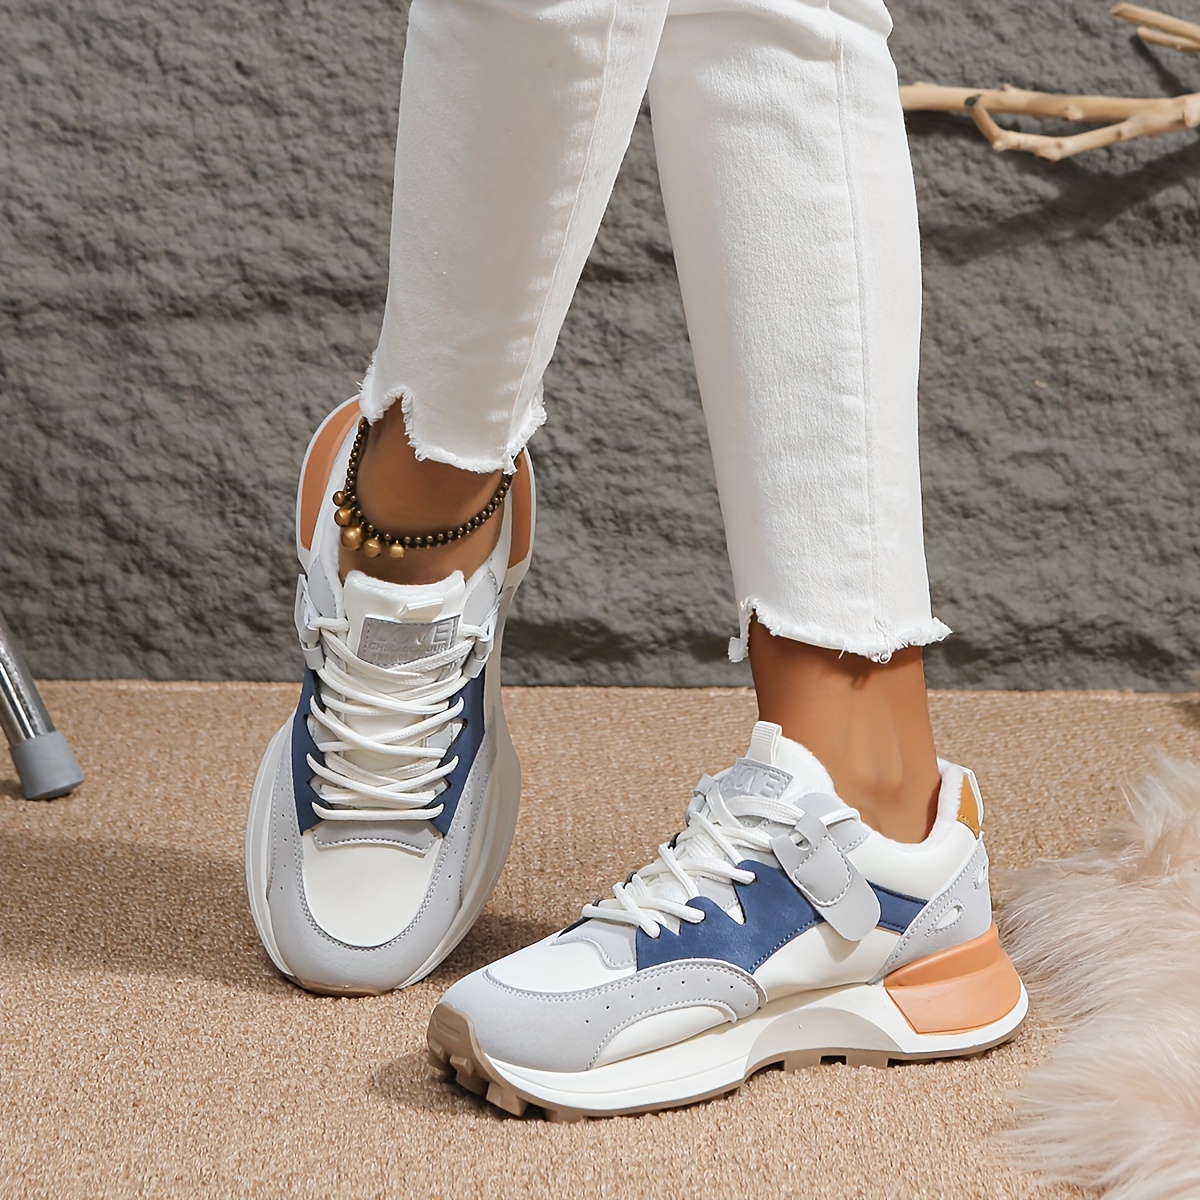 Colorblock – Zapatos deportivos múltiples para mujer, zapatos